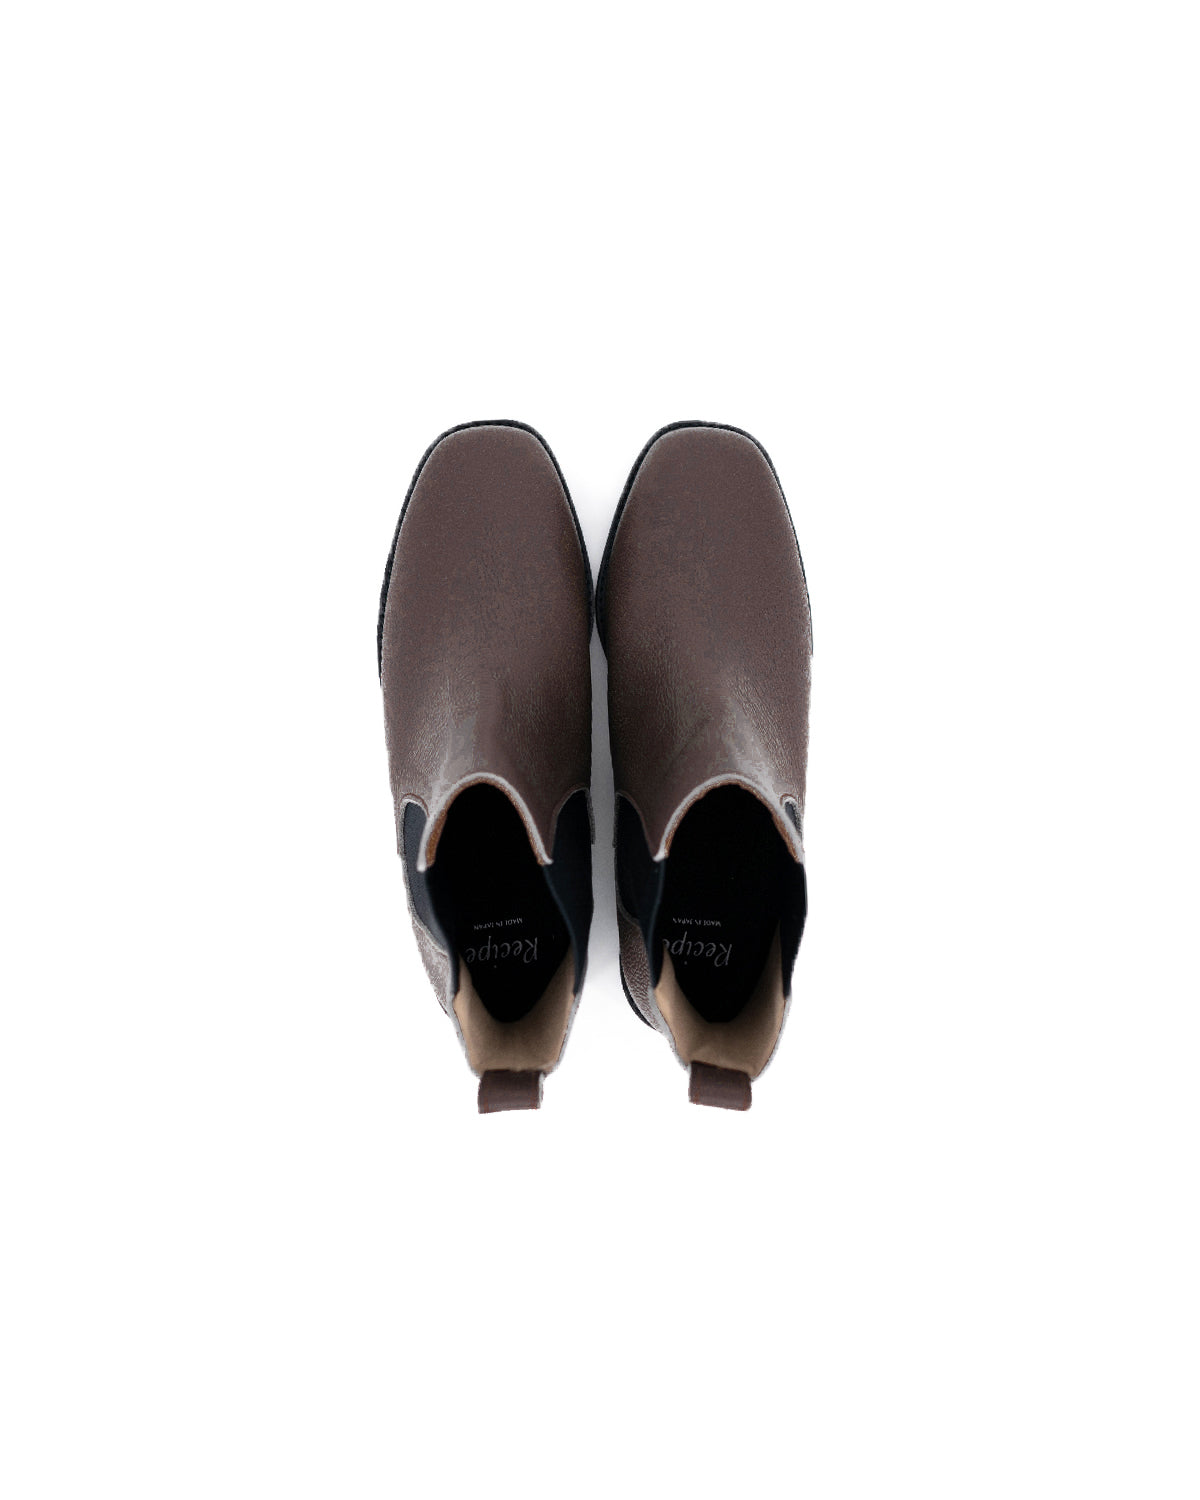 Chelsea Boots - Walnut brown